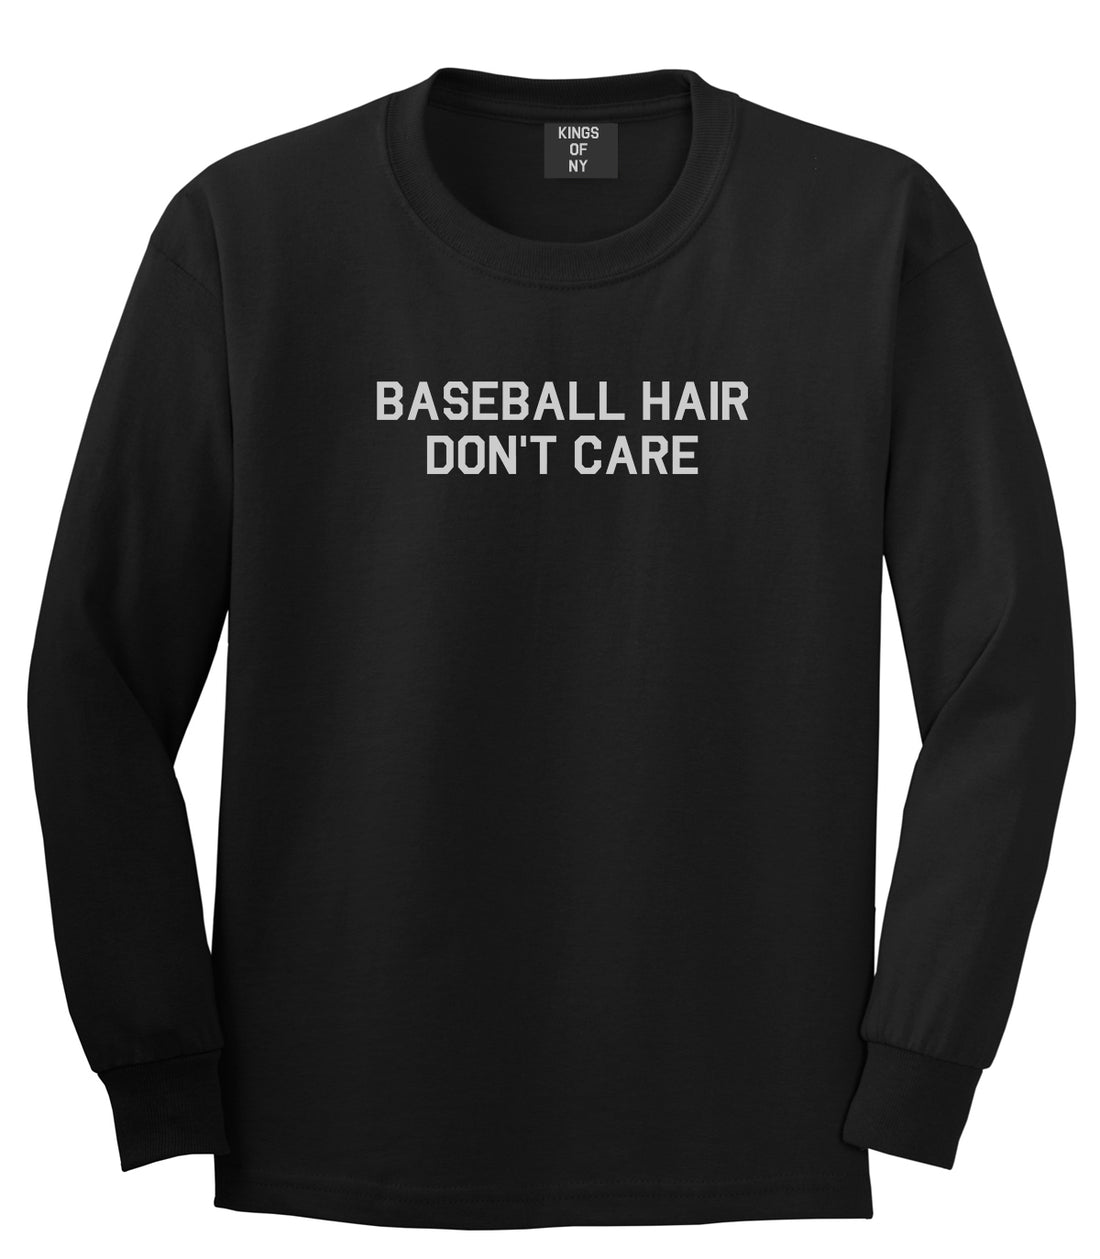 Baseball Hair Dont Care Black Long Sleeve T-Shirt by Kings Of NY